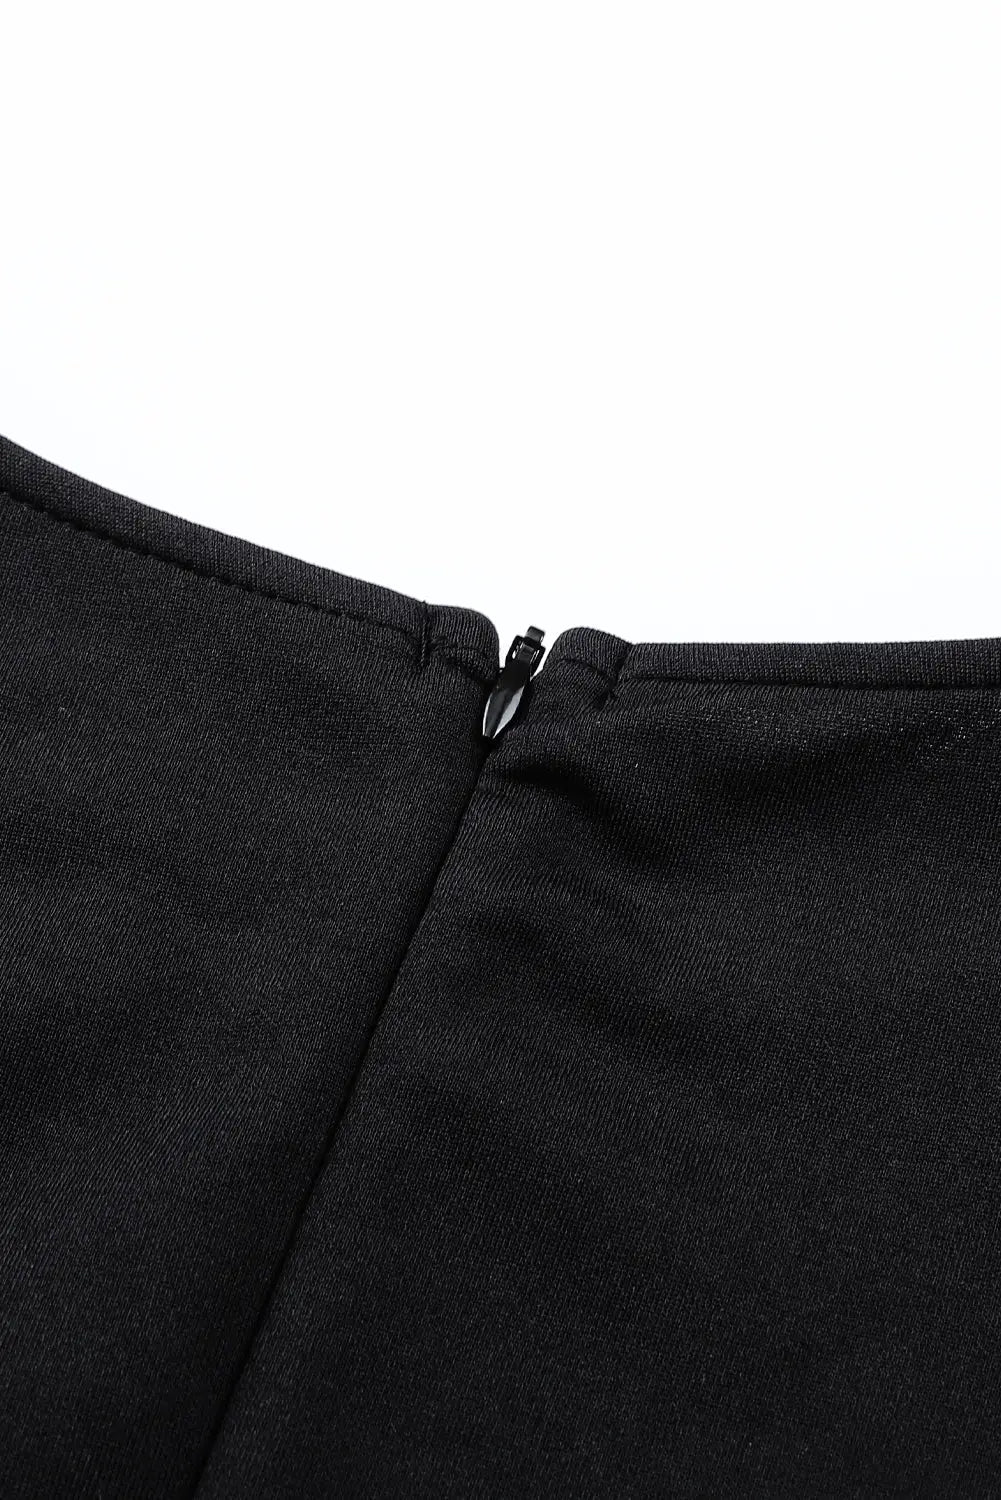 Black solid sleeveless wide leg jumpsuit - jumpsuits & rompers